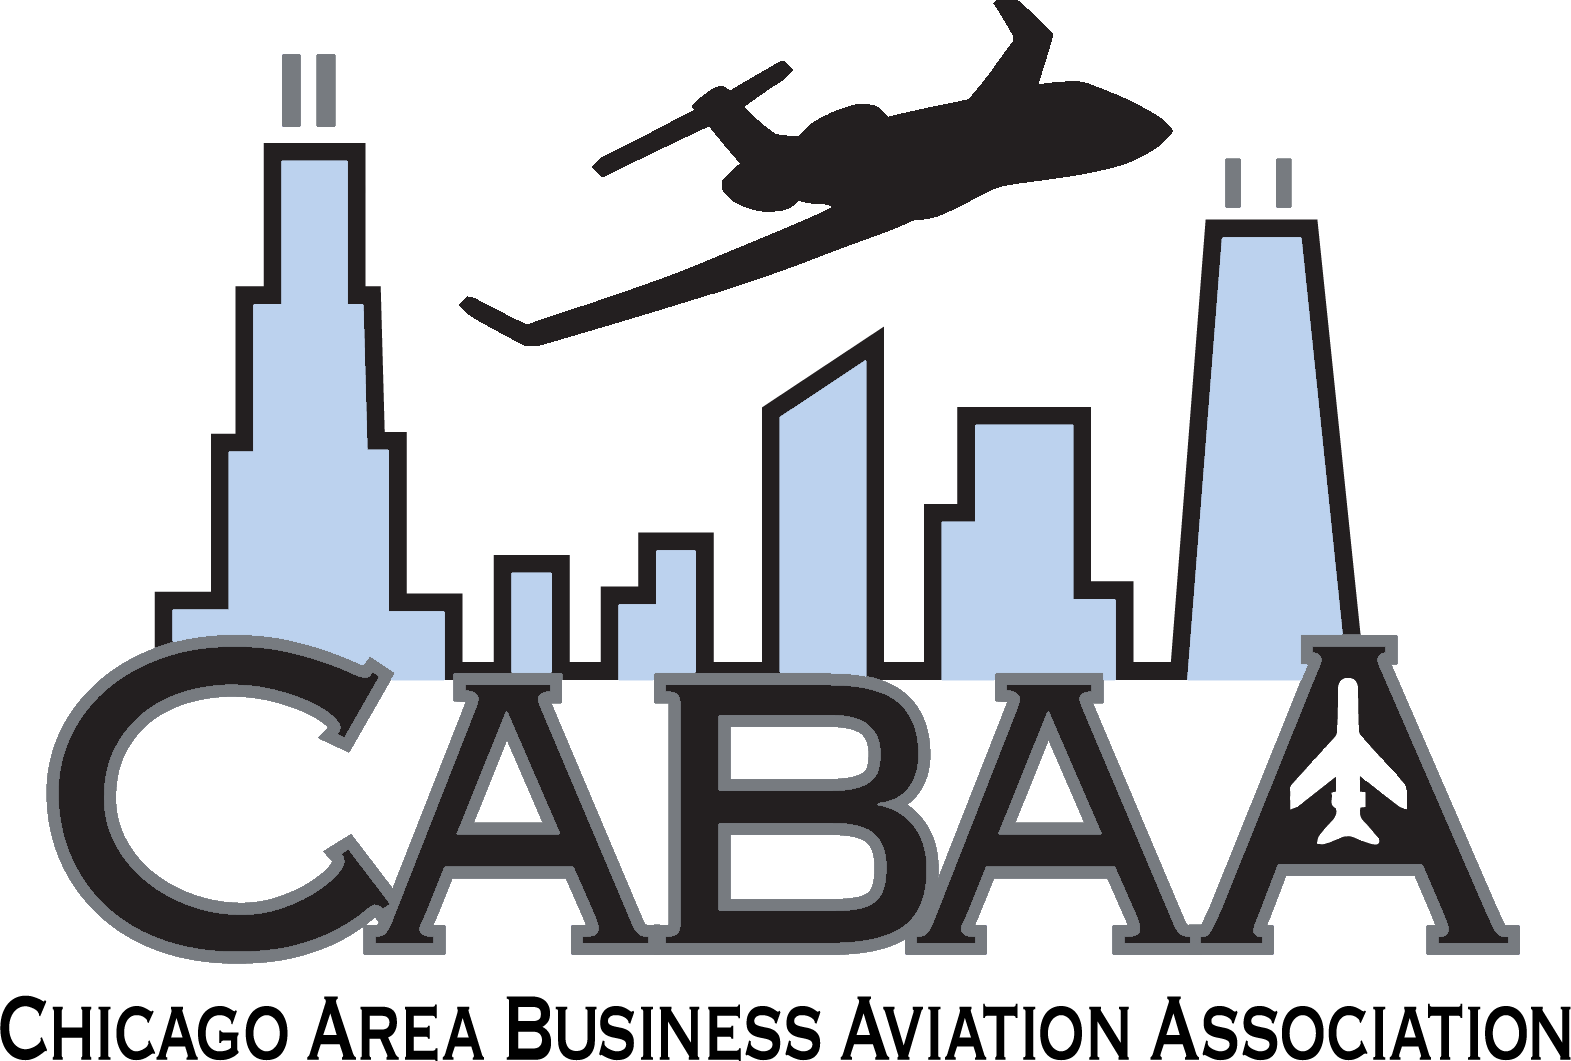 Chicago Area Business Aviation Association